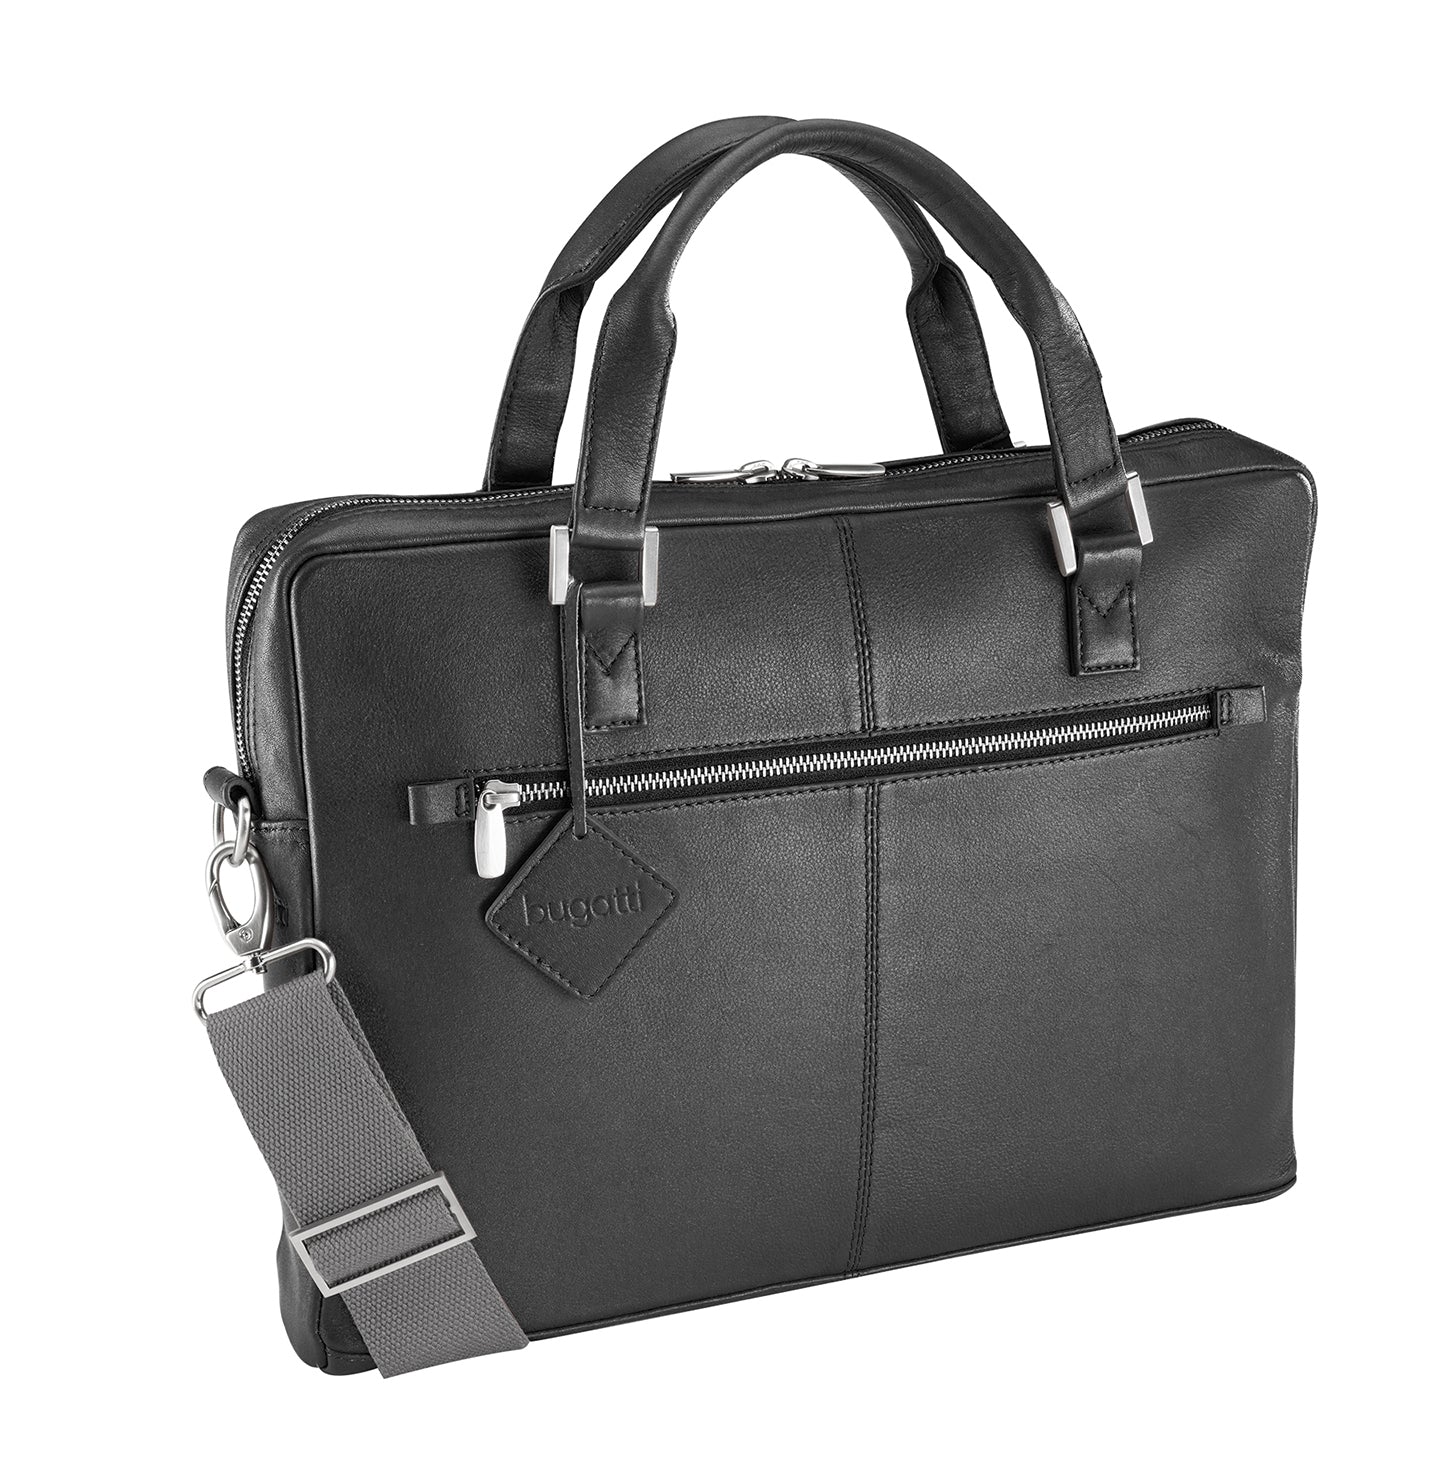 Manhattan leather handbag